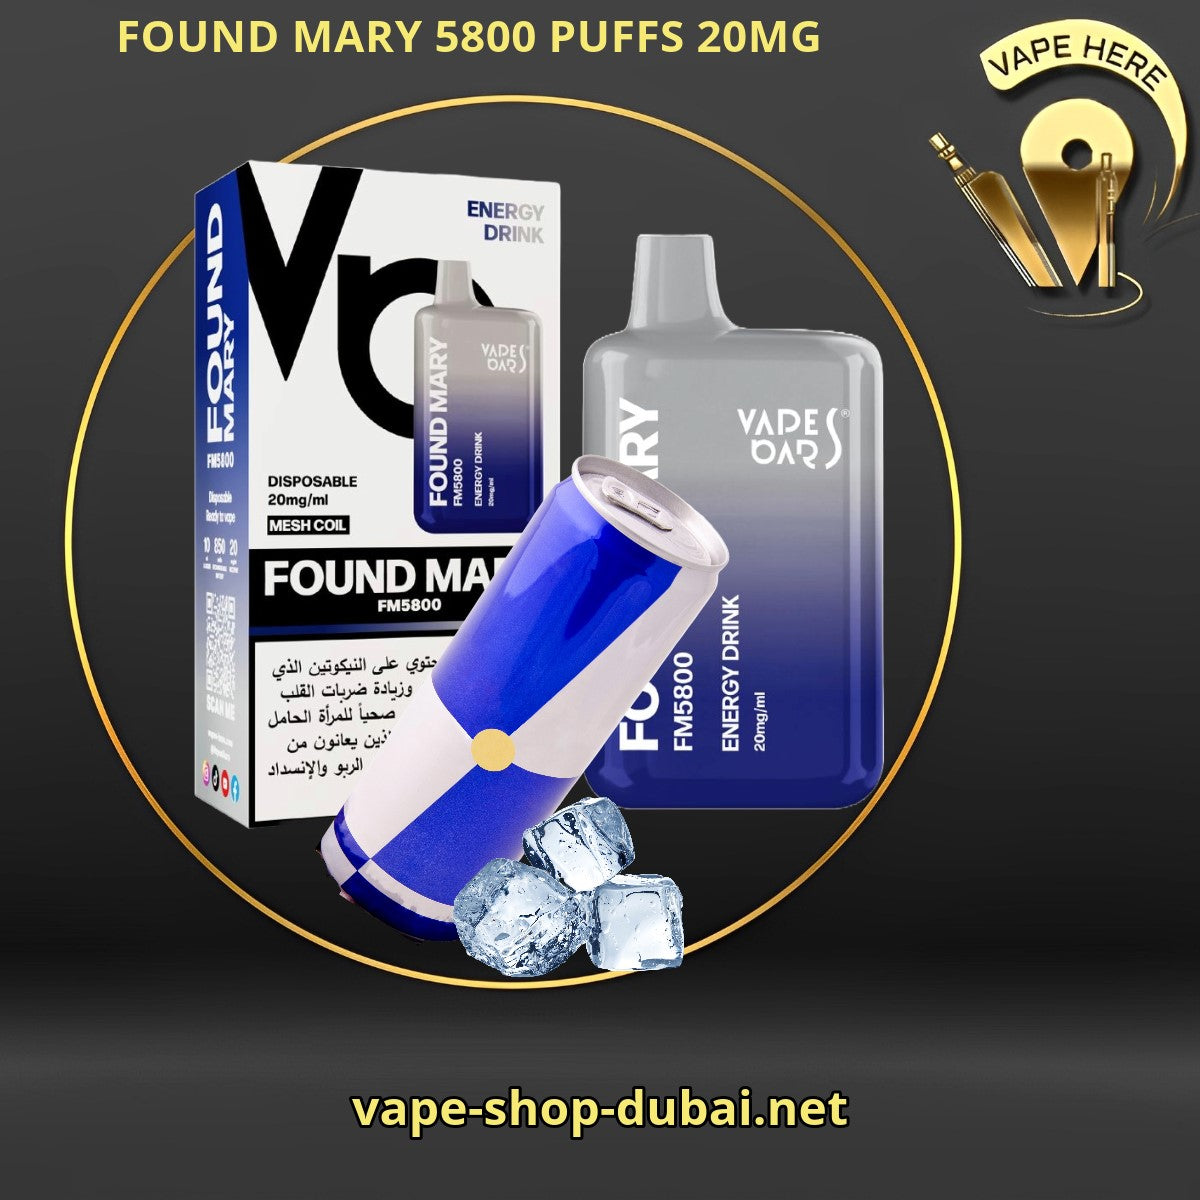 FOUND MARY FM 5800 PUFFS 20MG Energy Drink DISPOSABLE VAPE BY VAPE BARS UAE Dubai